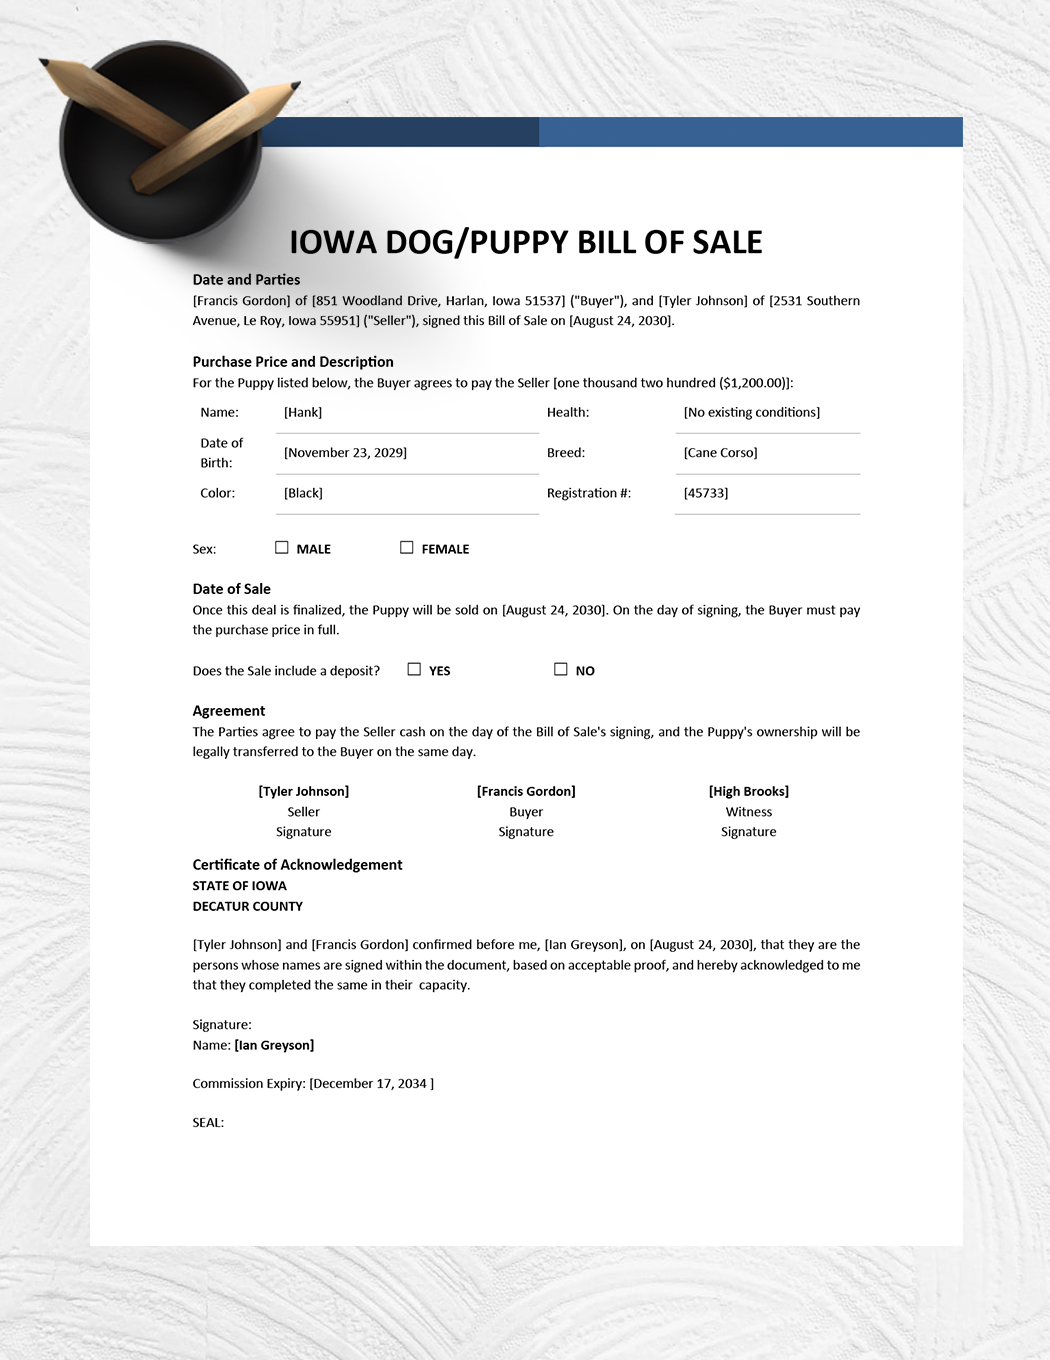 Iowa Dog / Puppy Bill of Sale Template